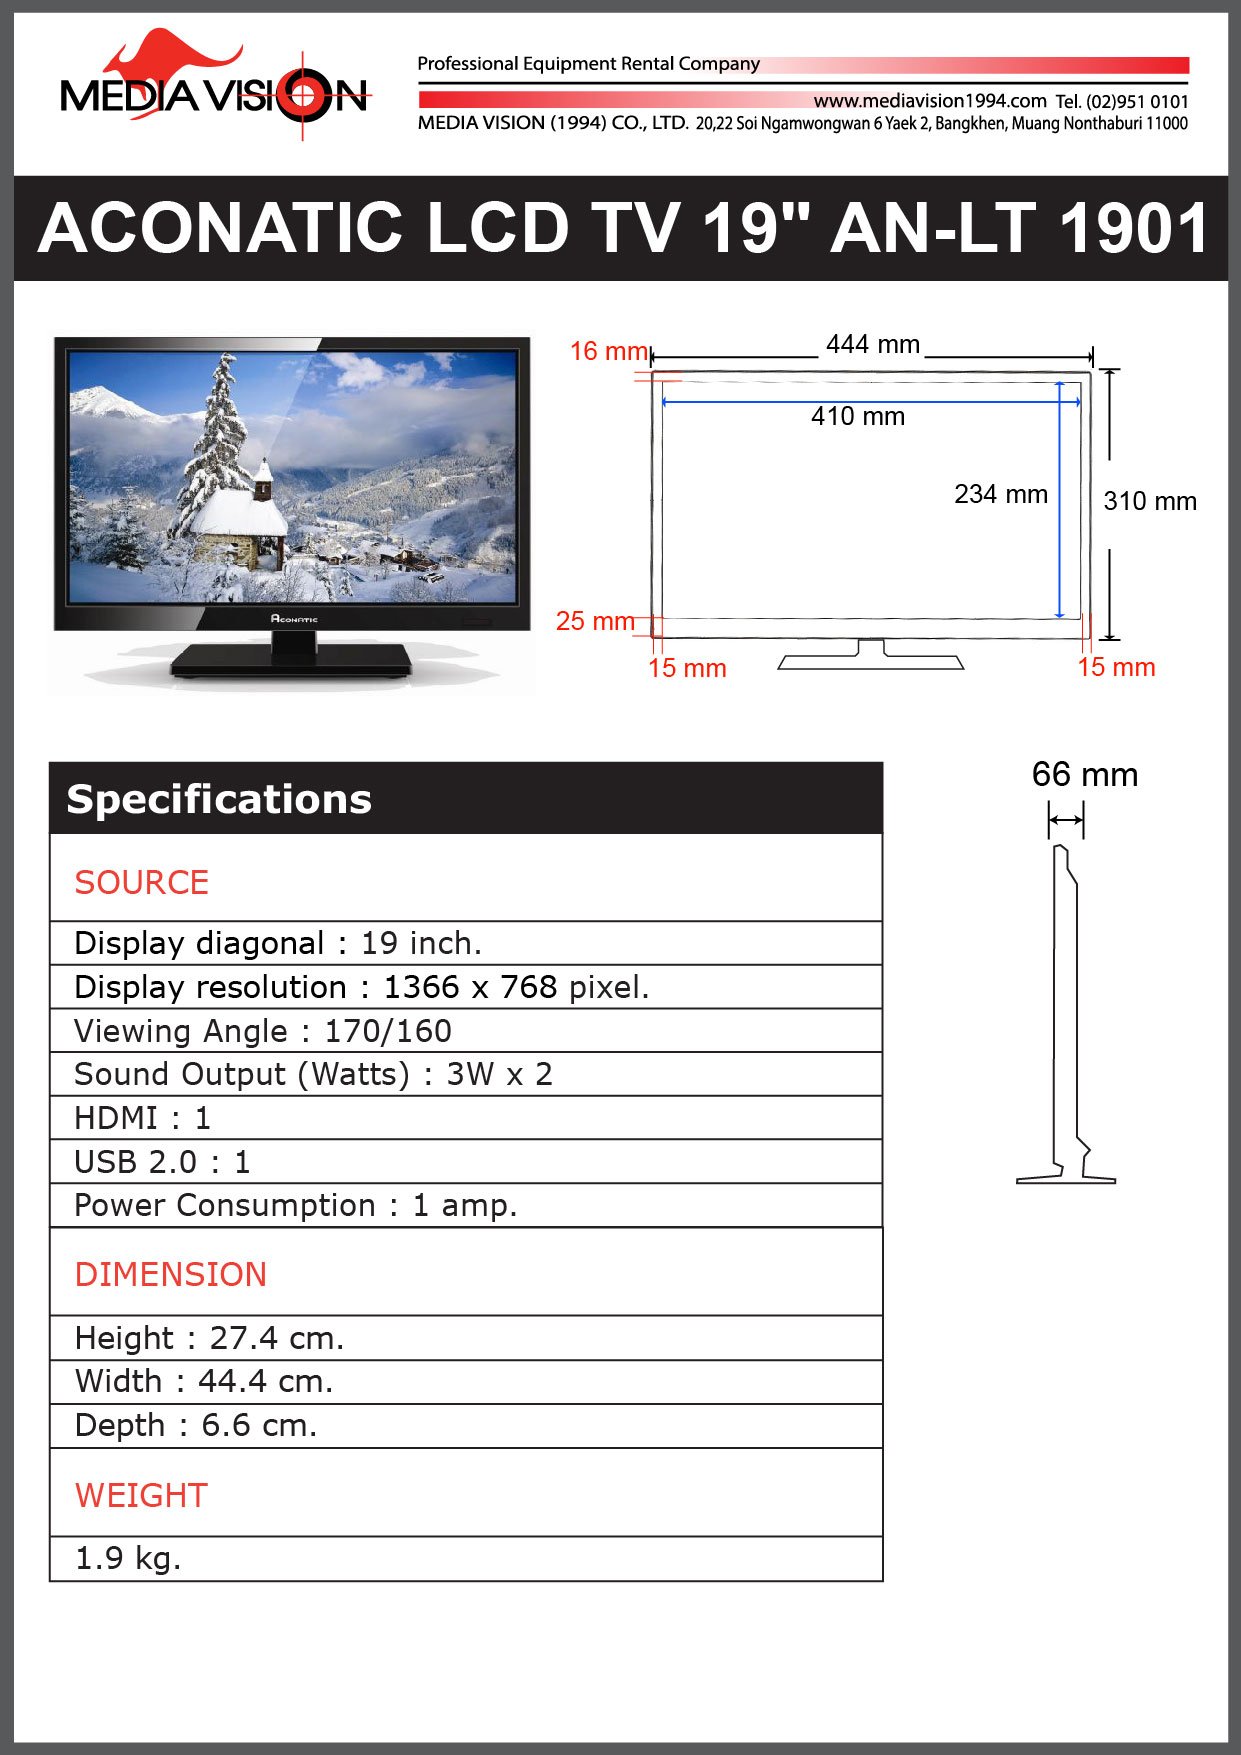 ACONATIC LCD TV 19" AN-LT 1901